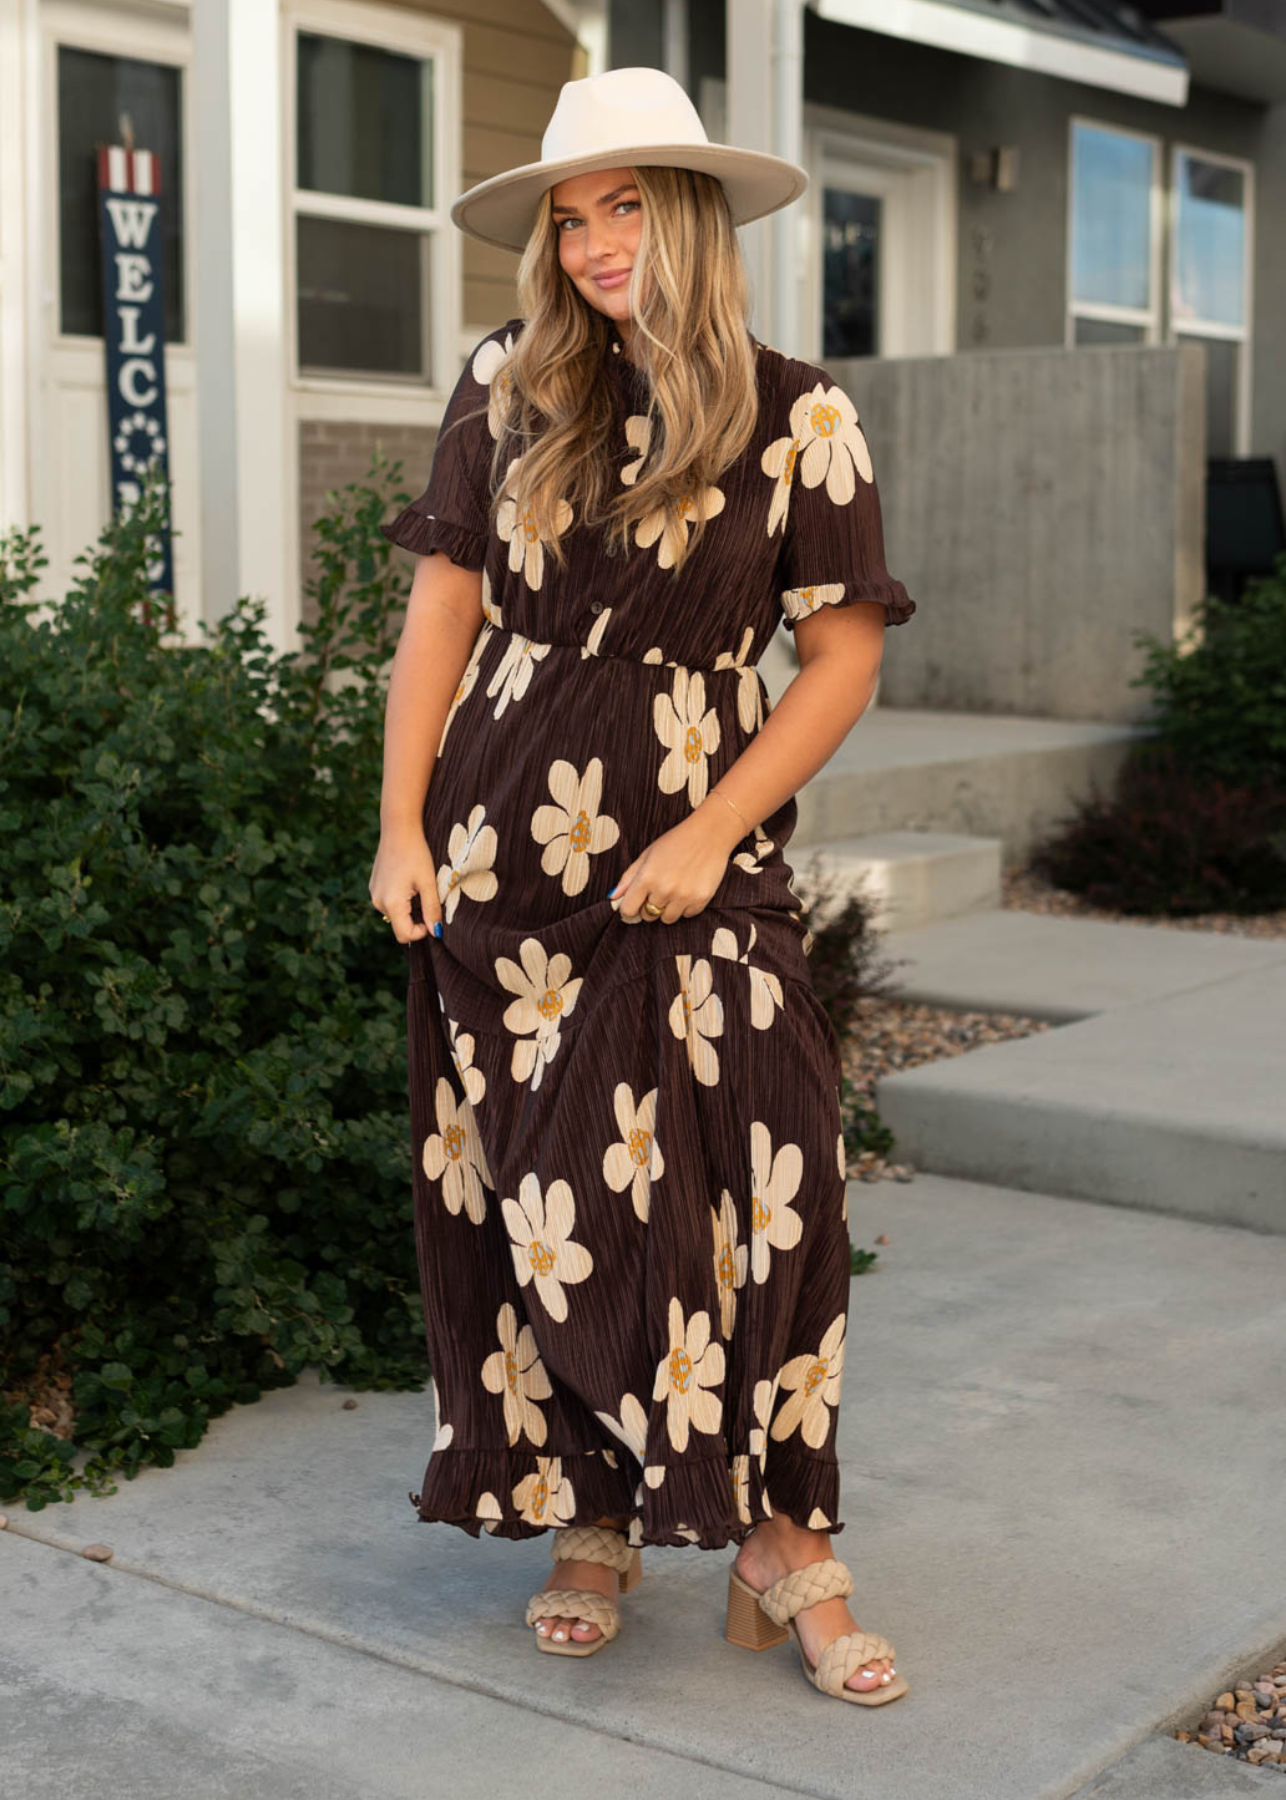 Short sleeve brown floral dress